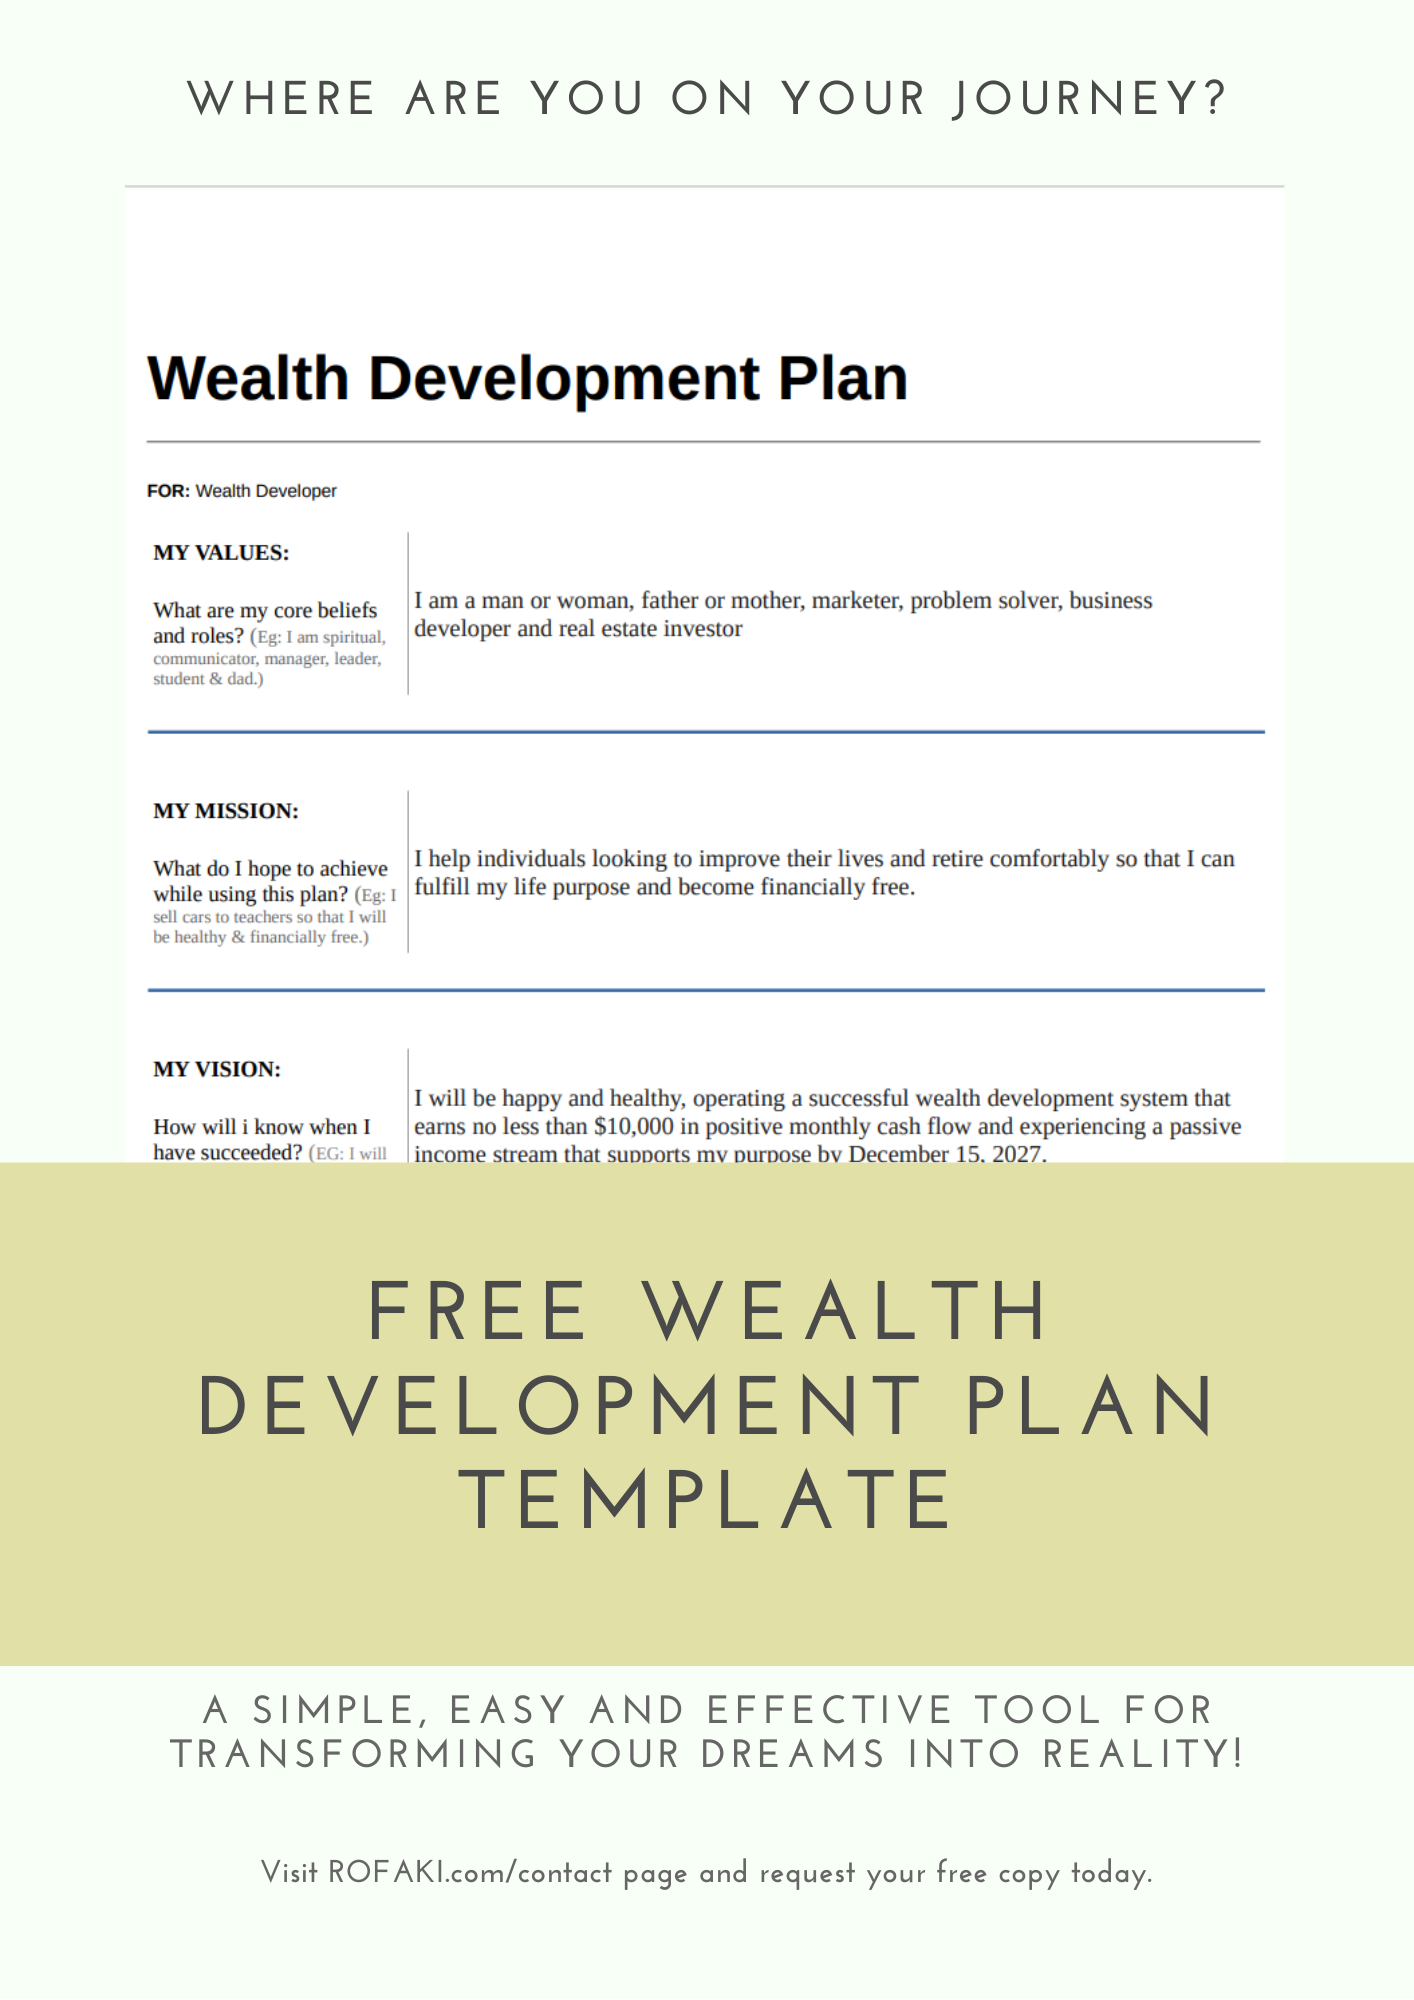 Wealth Development Plan Template